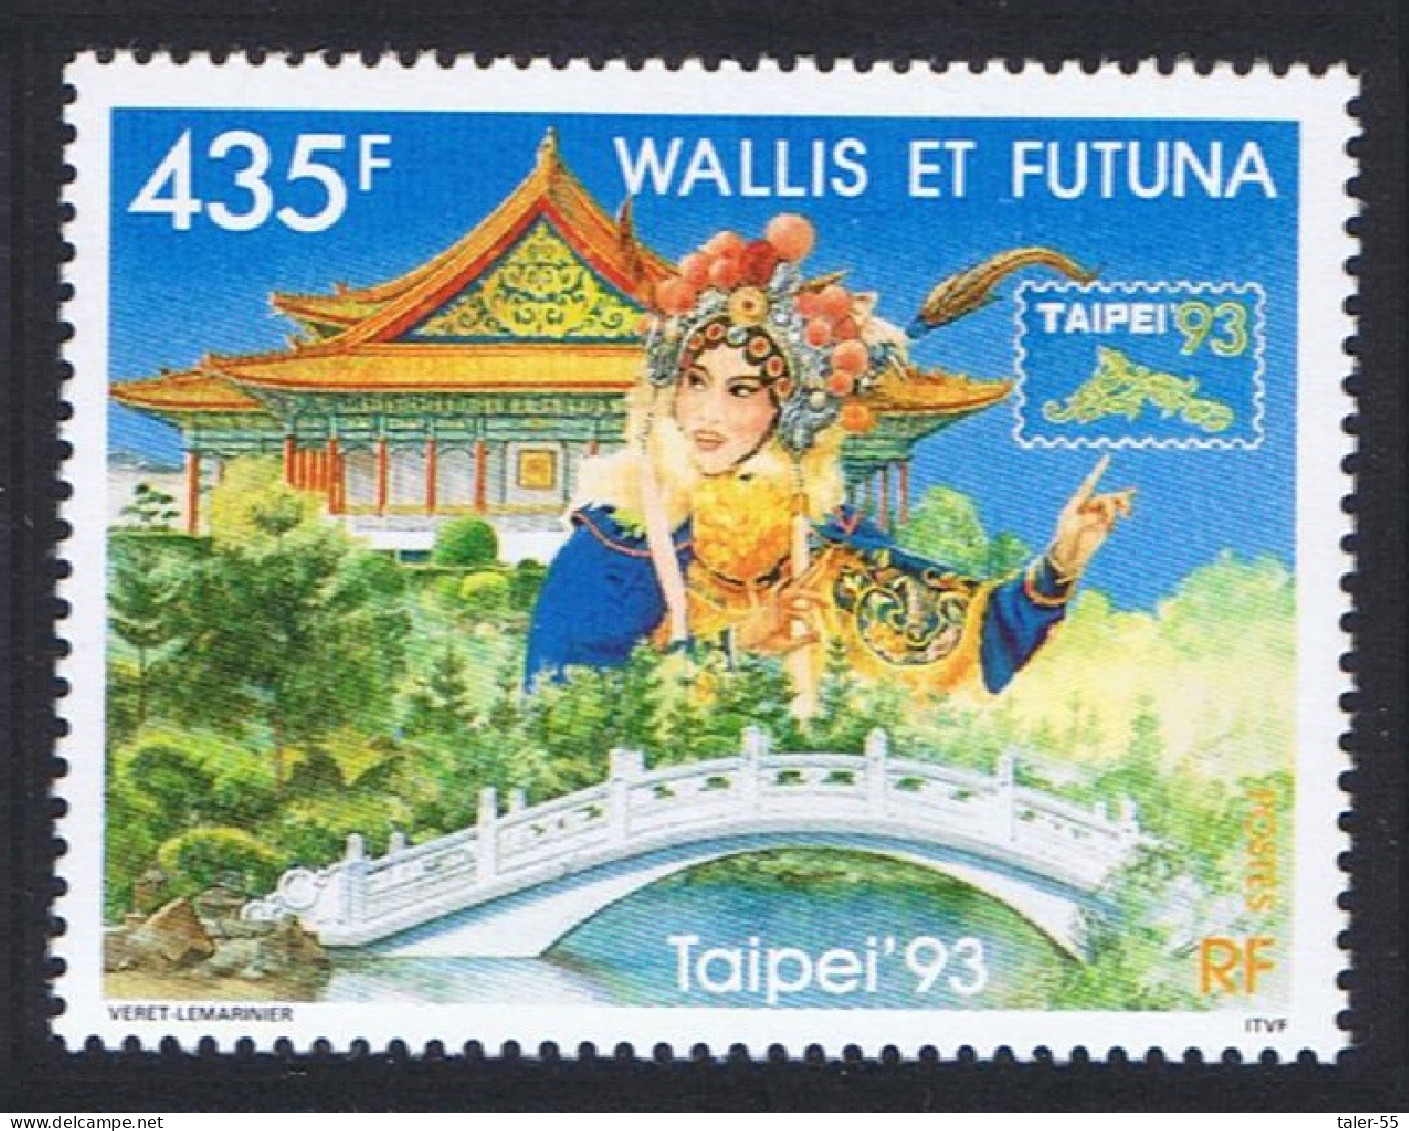 Wallis And Futuna 'Taipei 93' International Stamp Exhibition 1993 MNH SG#631 Sc#448 - Nuevos